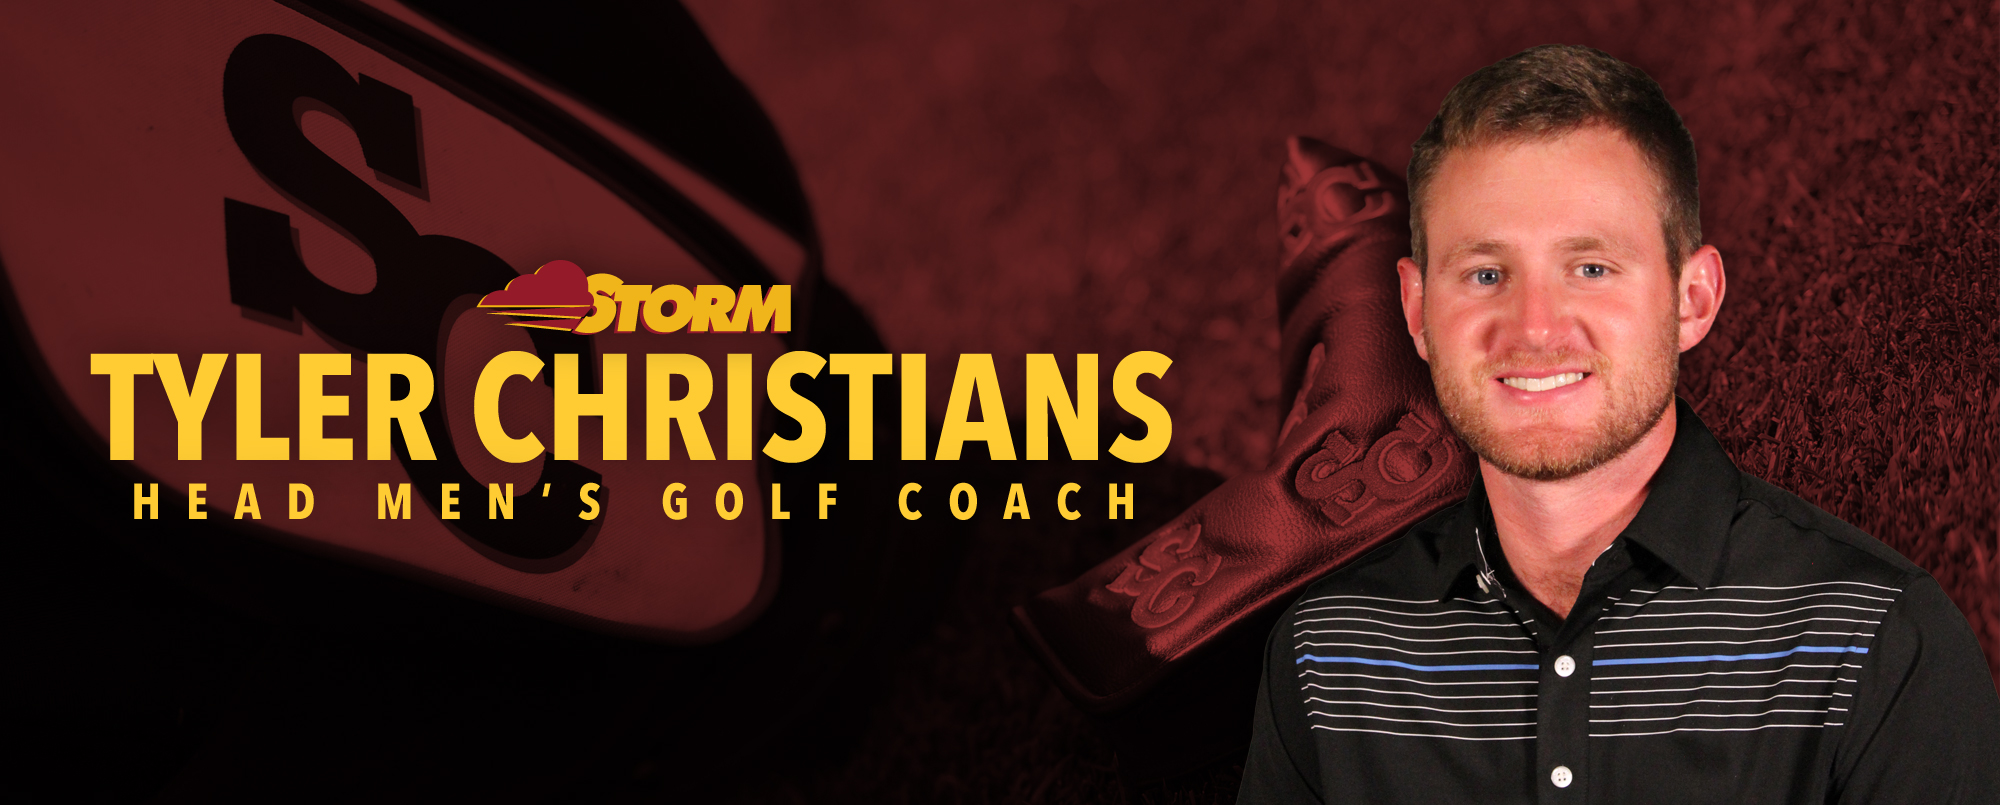 Tyler Christians has been hired as head men's golf coach.